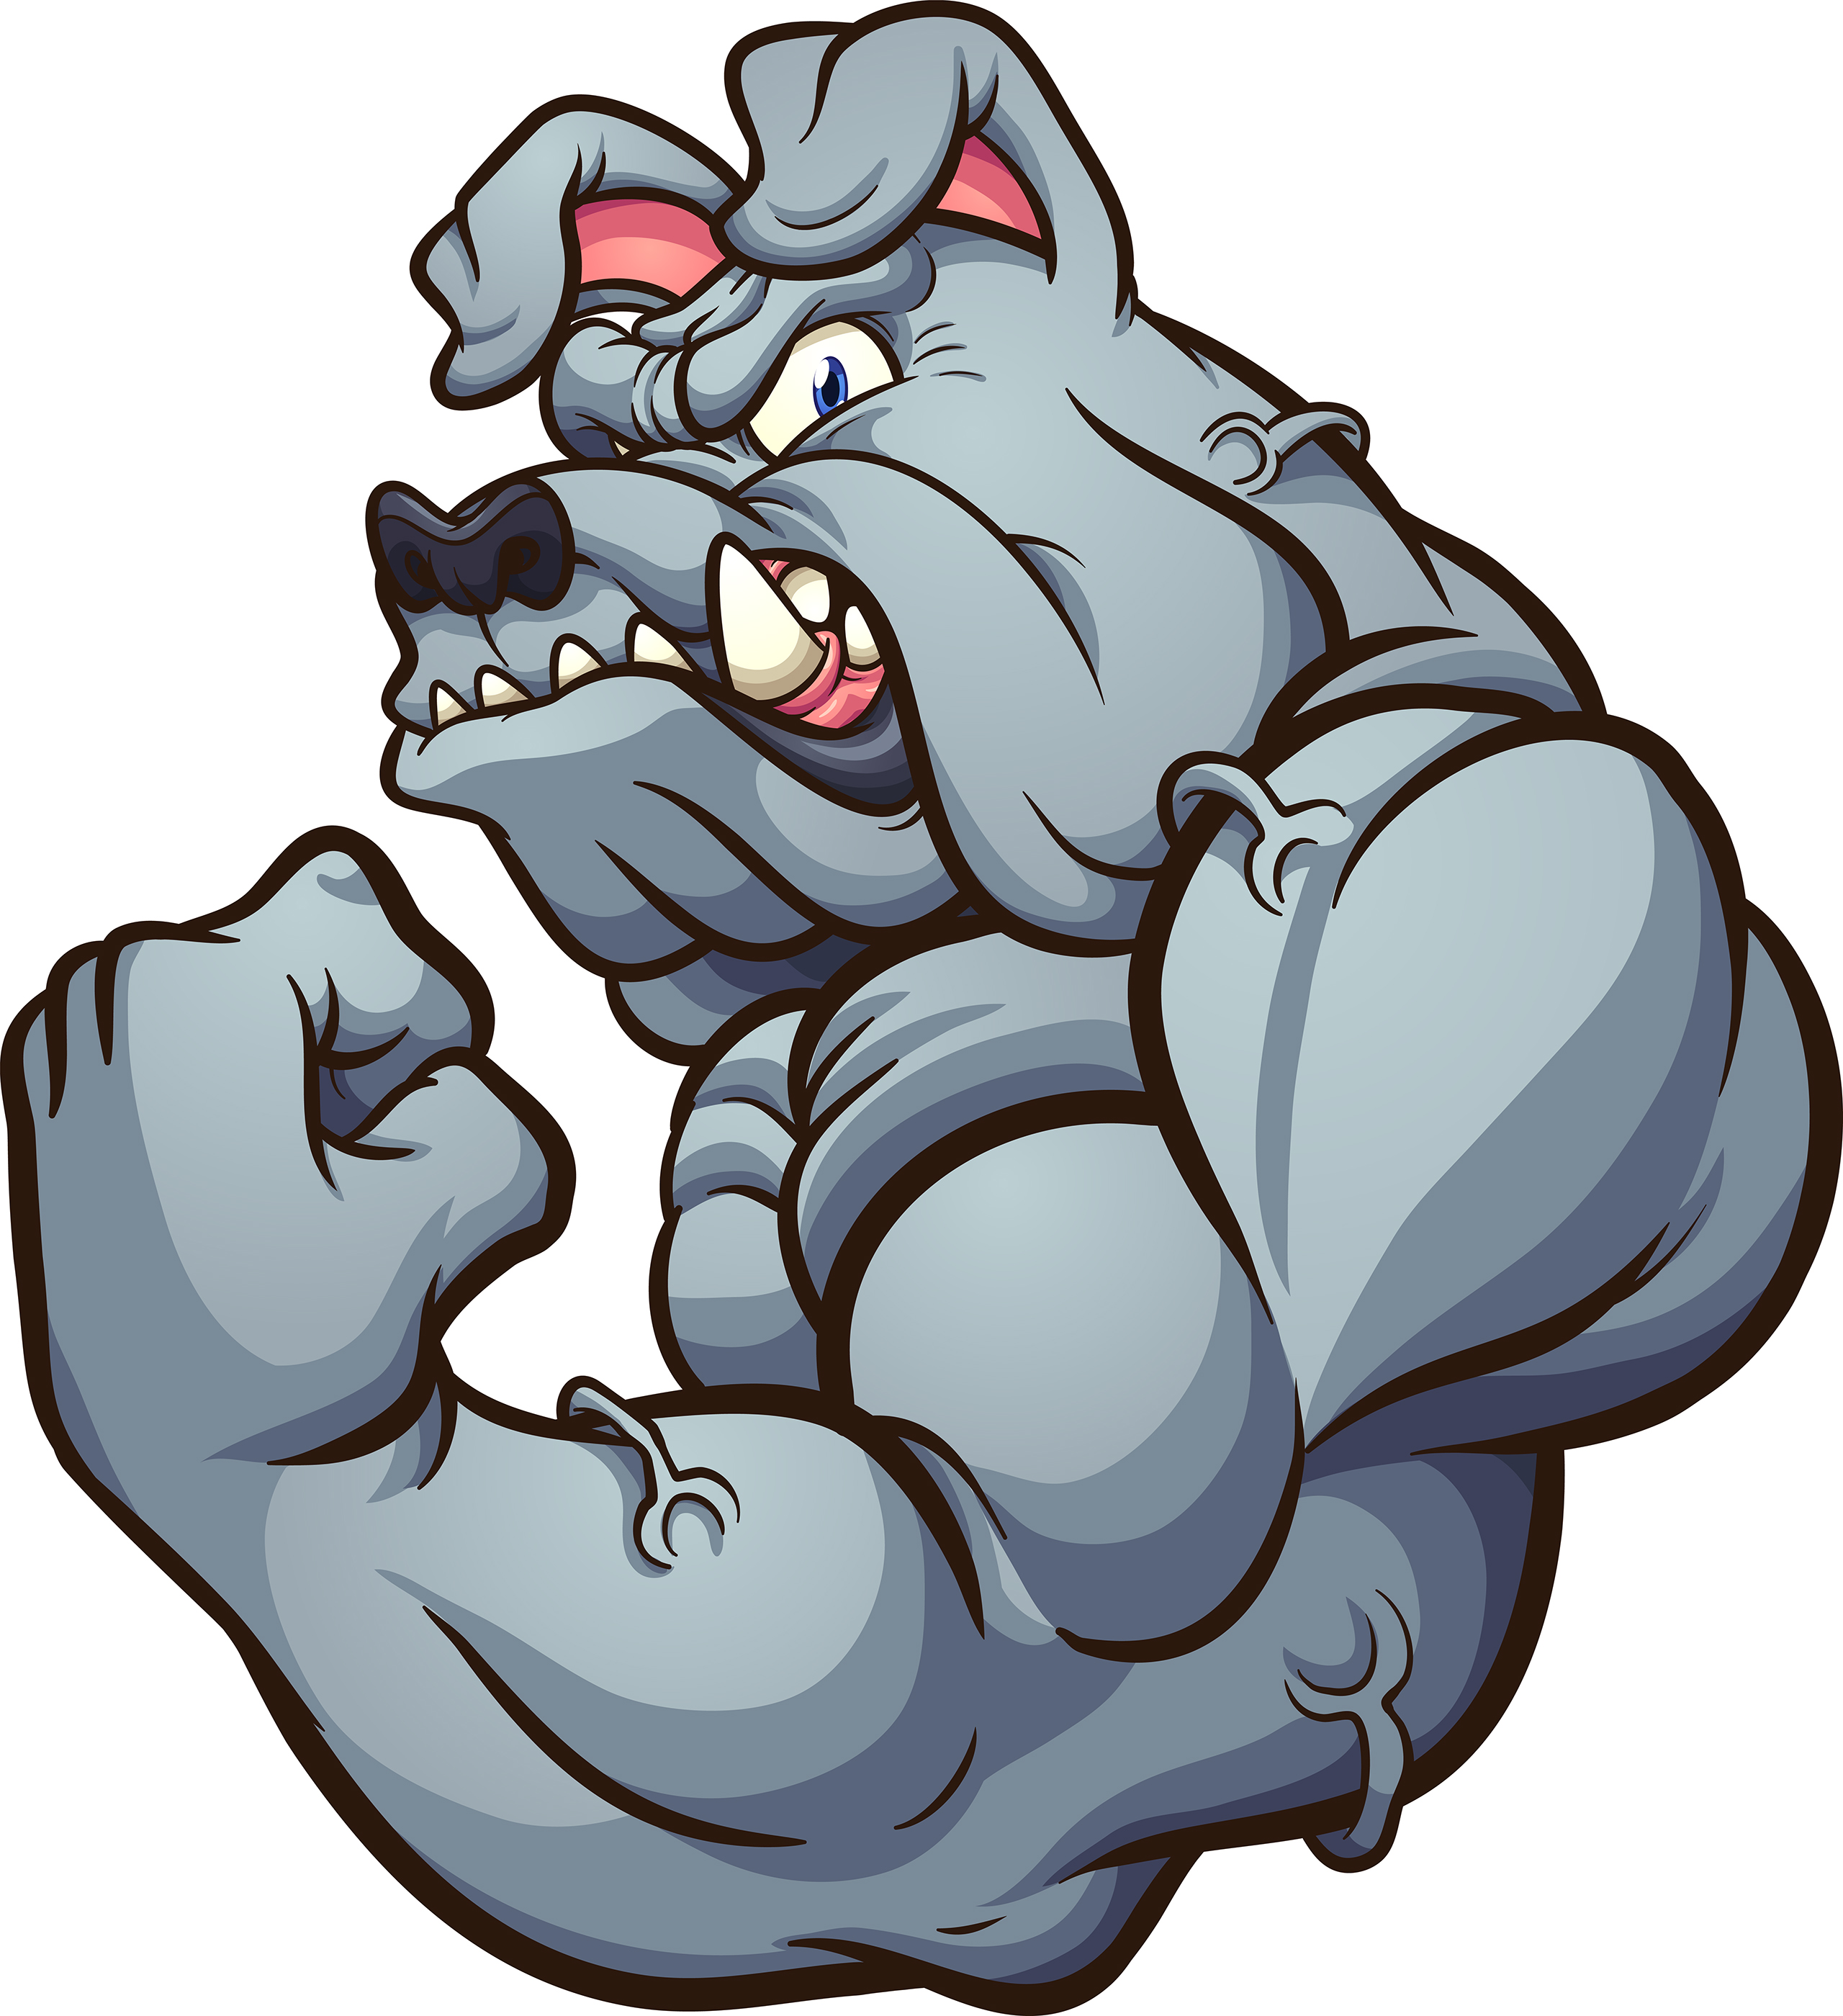 Strong Bulldog Mascot Download Free Vectors Clipart Graphics